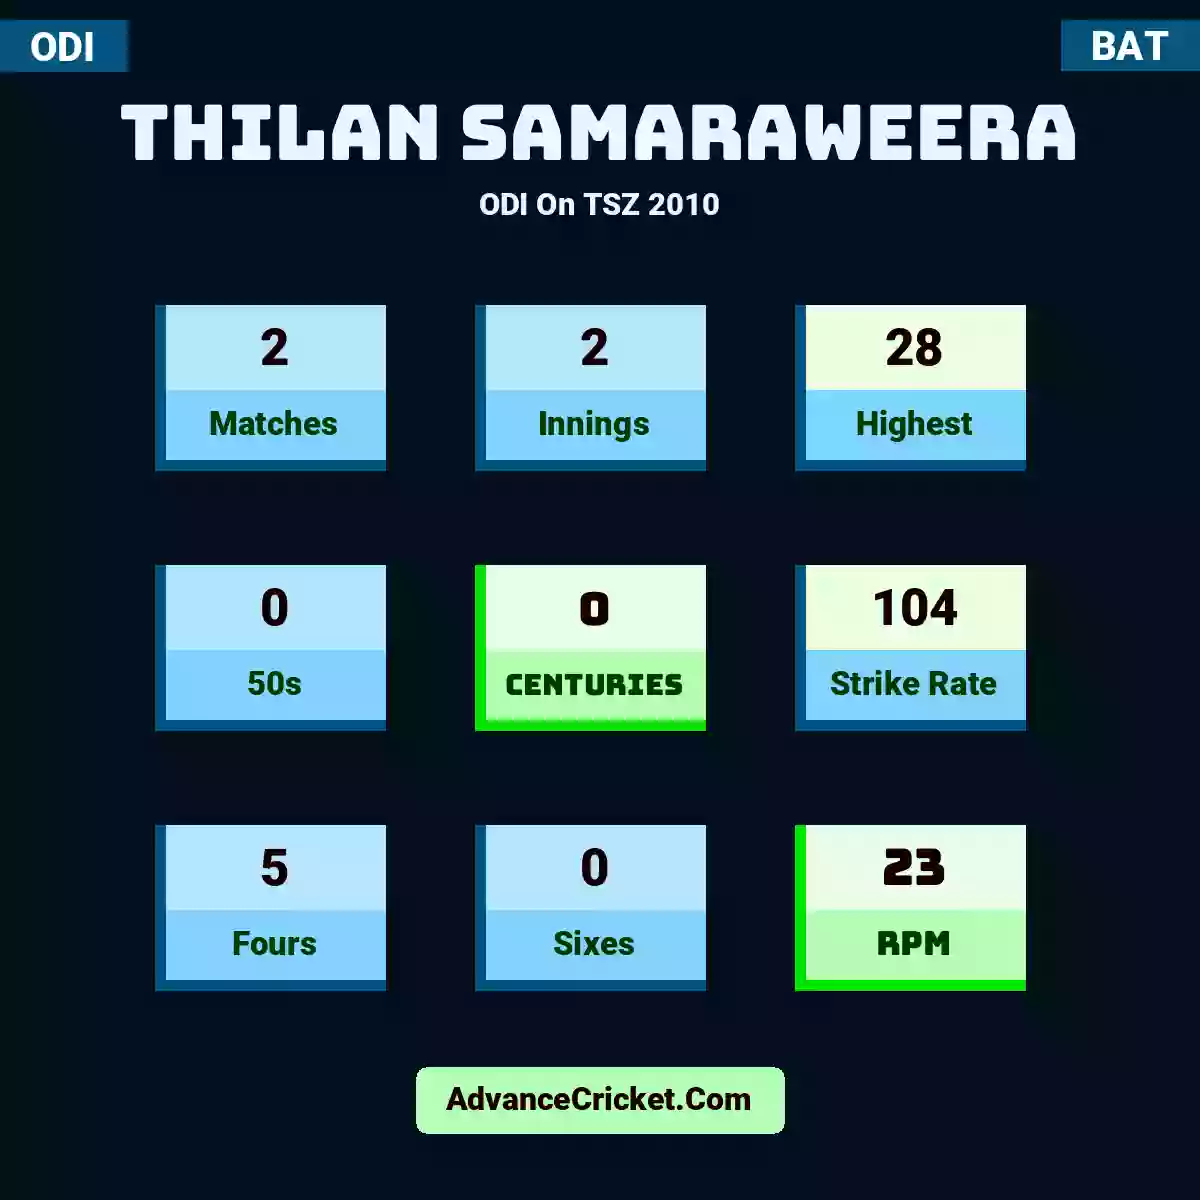 Thilan Samaraweera ODI  On TSZ 2010, Thilan Samaraweera played 2 matches, scored 28 runs as highest, 0 half-centuries, and 0 centuries, with a strike rate of 104. T.Samaraweera hit 5 fours and 0 sixes, with an RPM of 23.